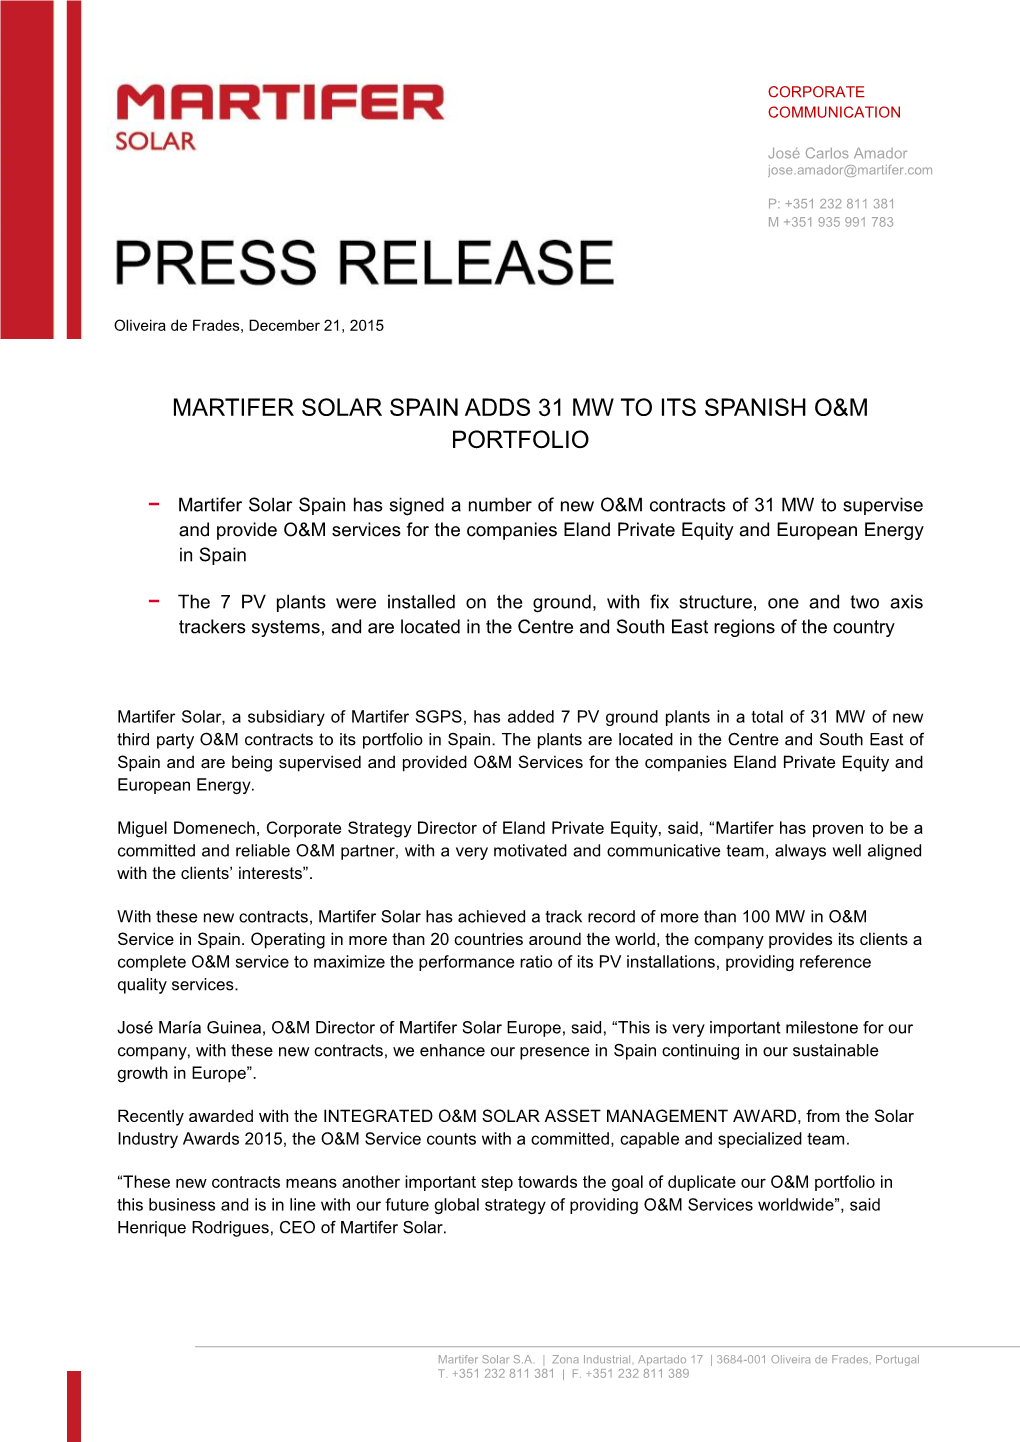 Martifer Solar Spain Adds 31 Mw to Its Spanish O&M